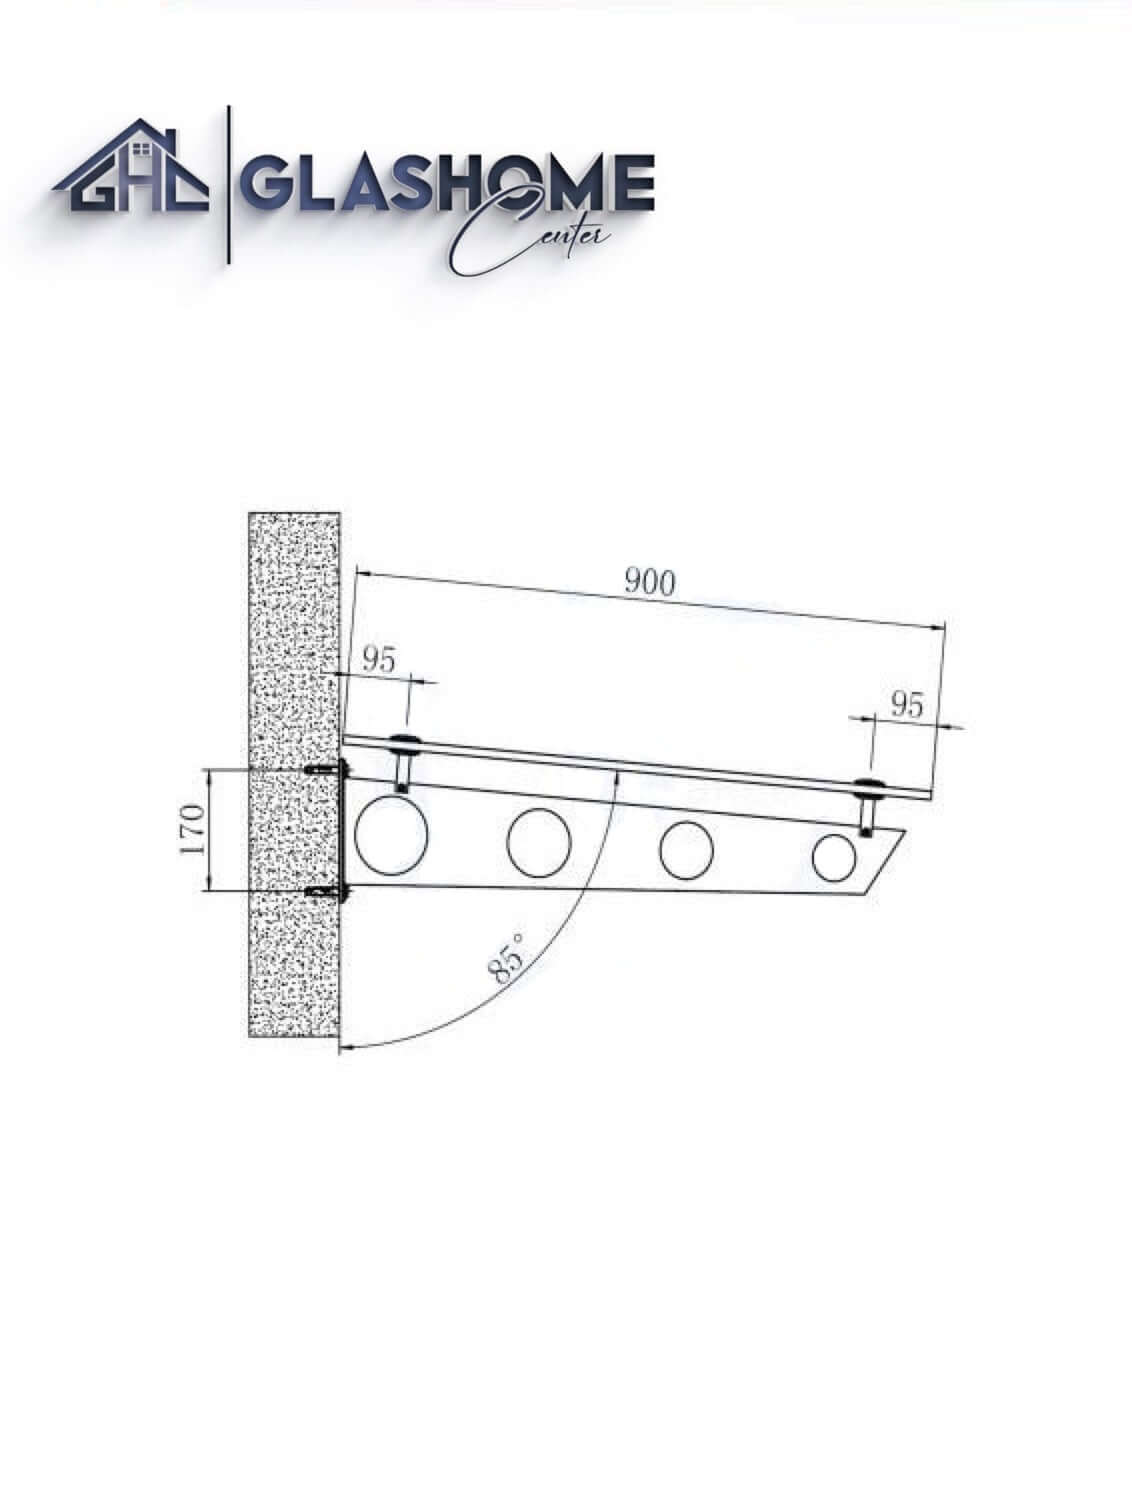 GlasHomeCenter - glass canopy - Clear glass - 120x90cm - 13.1mm VSG - incl. 2 Edelstahlhalterungen Variant "Stockholm"